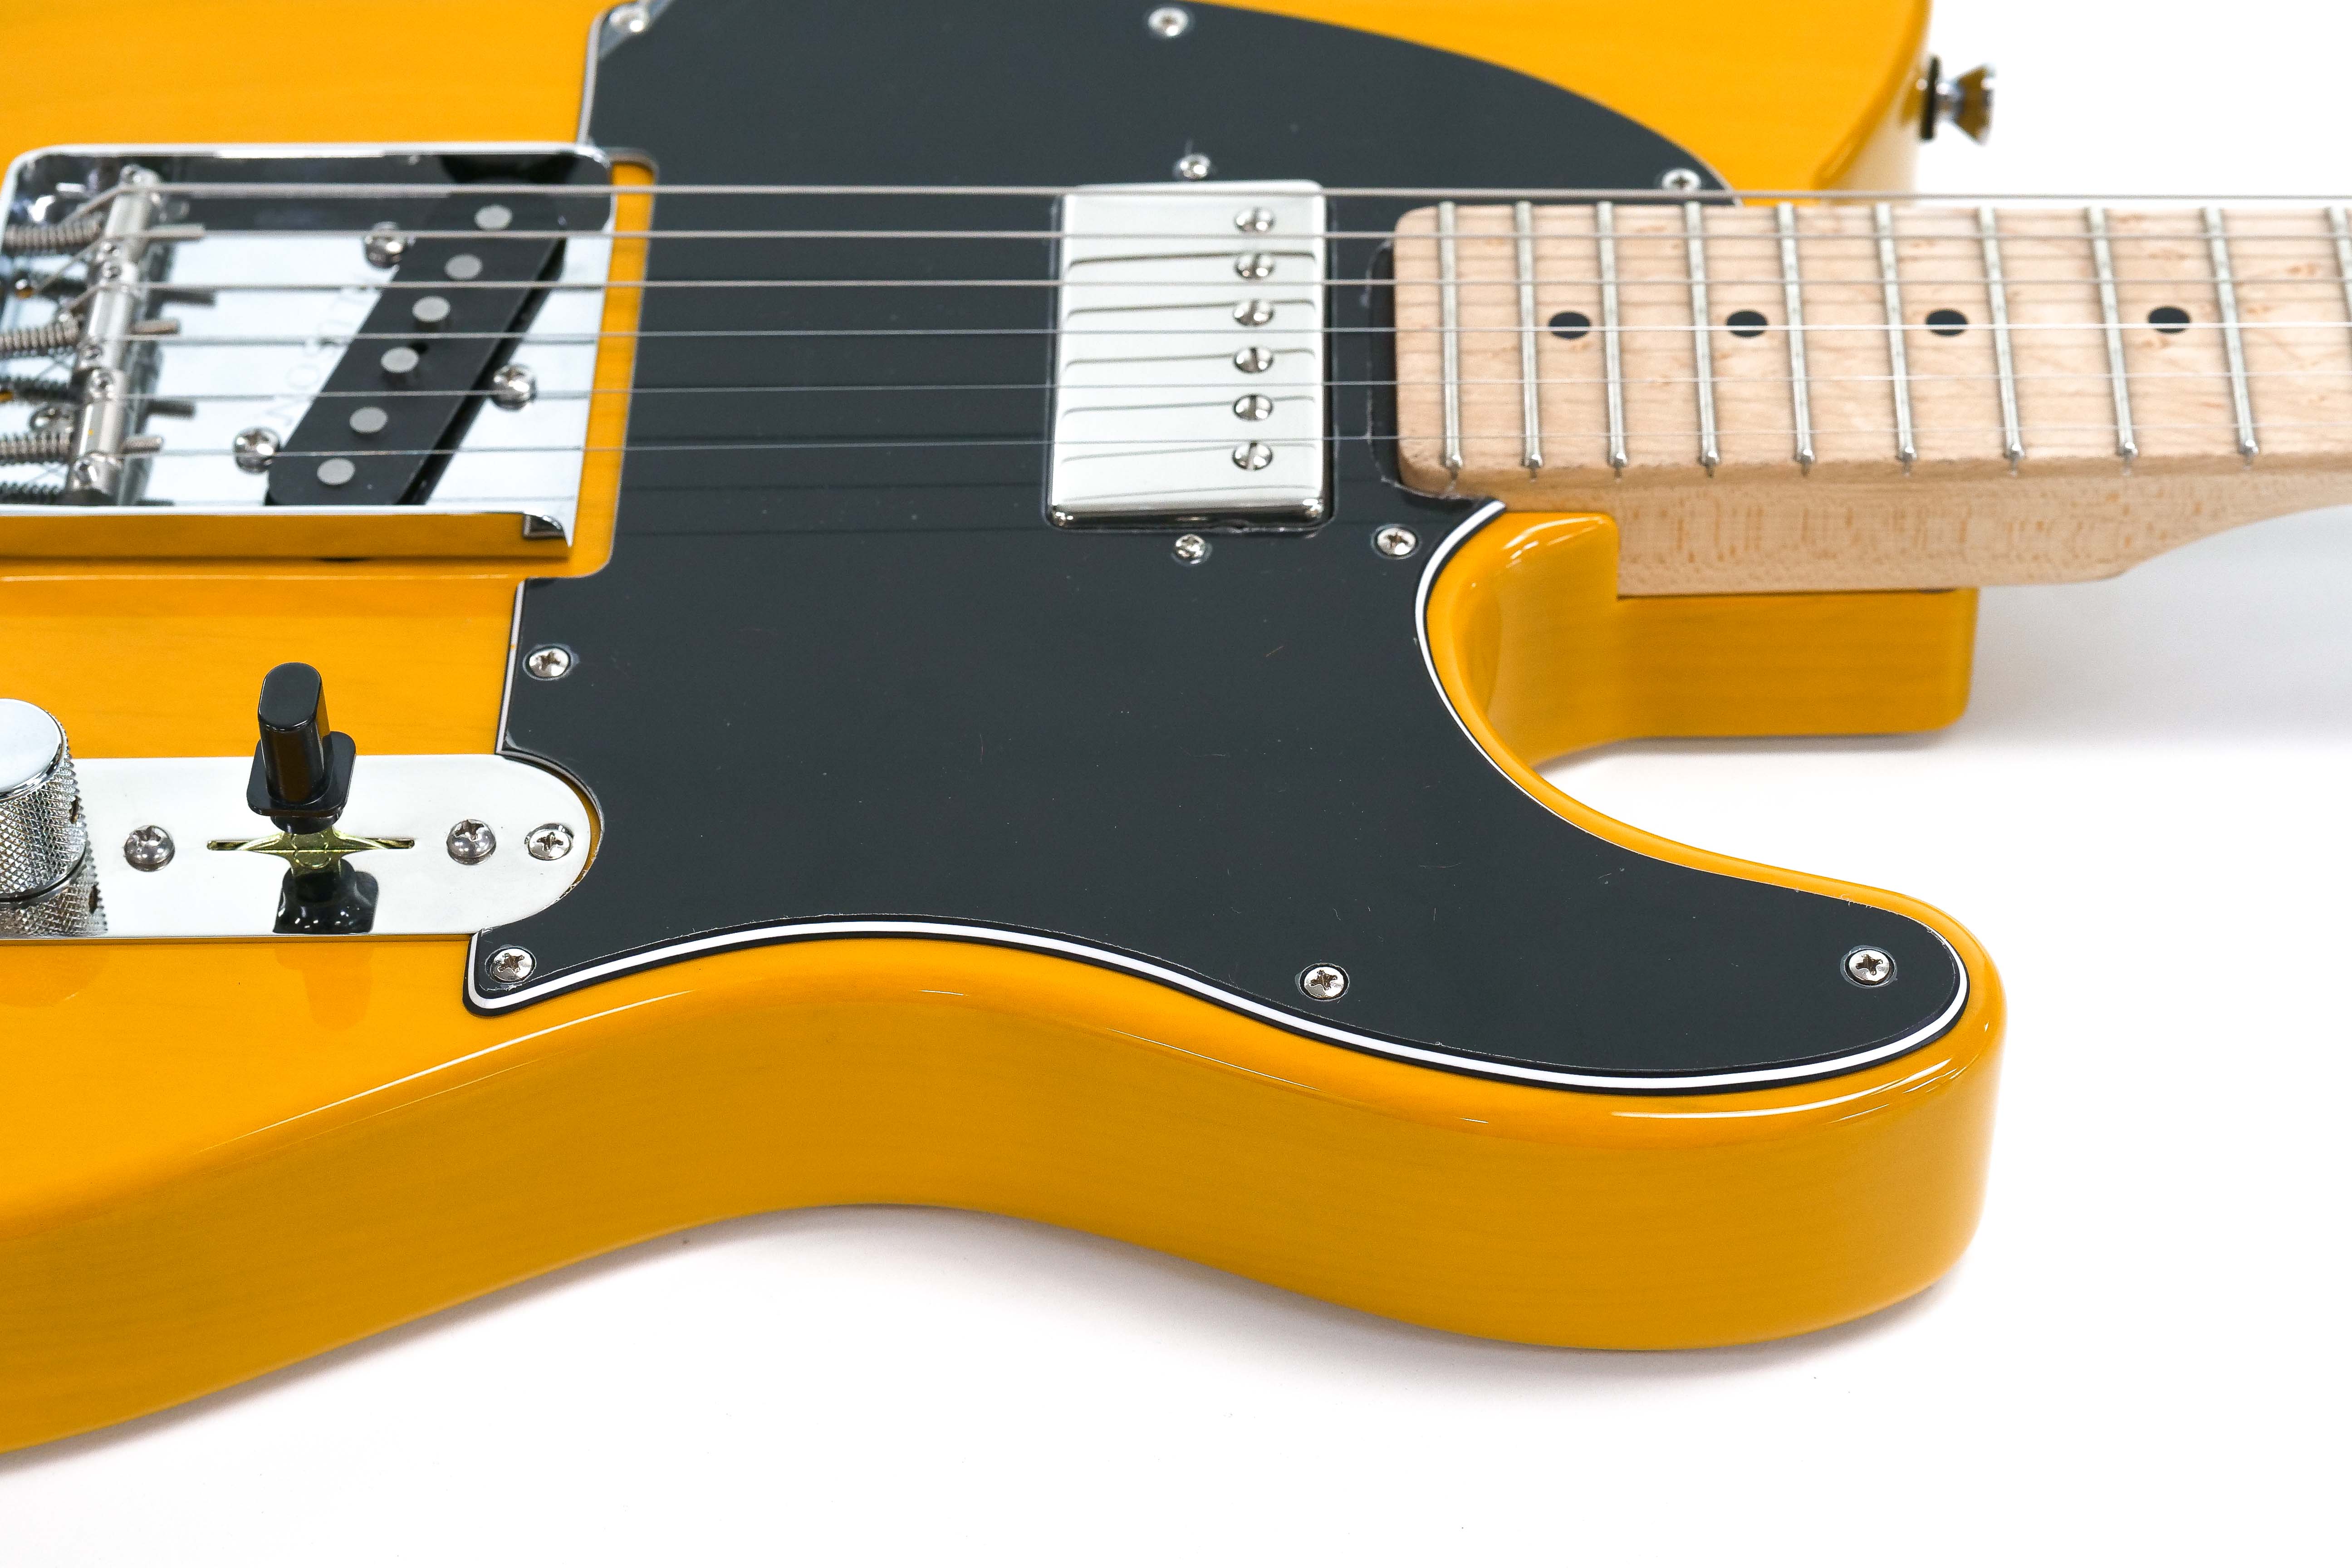 Carter Instruments 2023 Custom Butterscotch Electric Guitar #0002 "AMARELA"